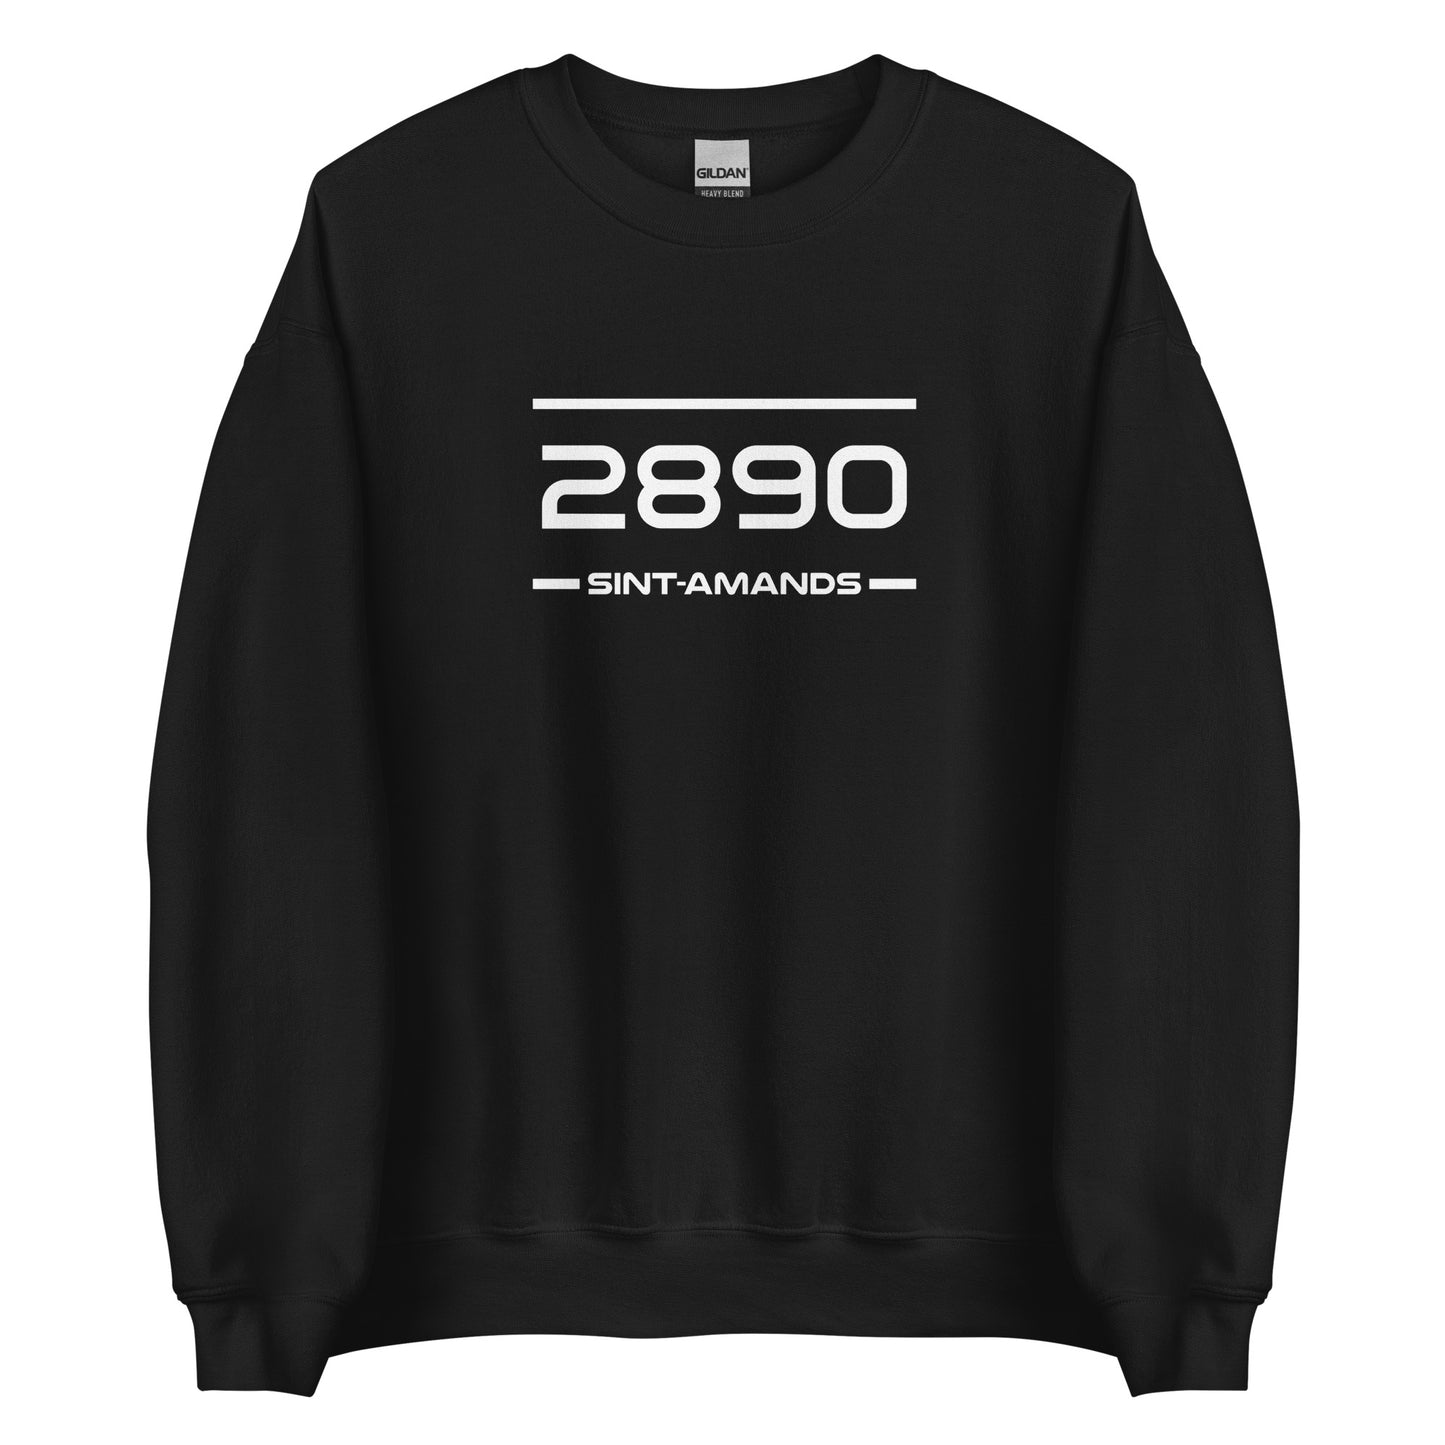 Sweater - 2890 - Sint-Amands (M/V)